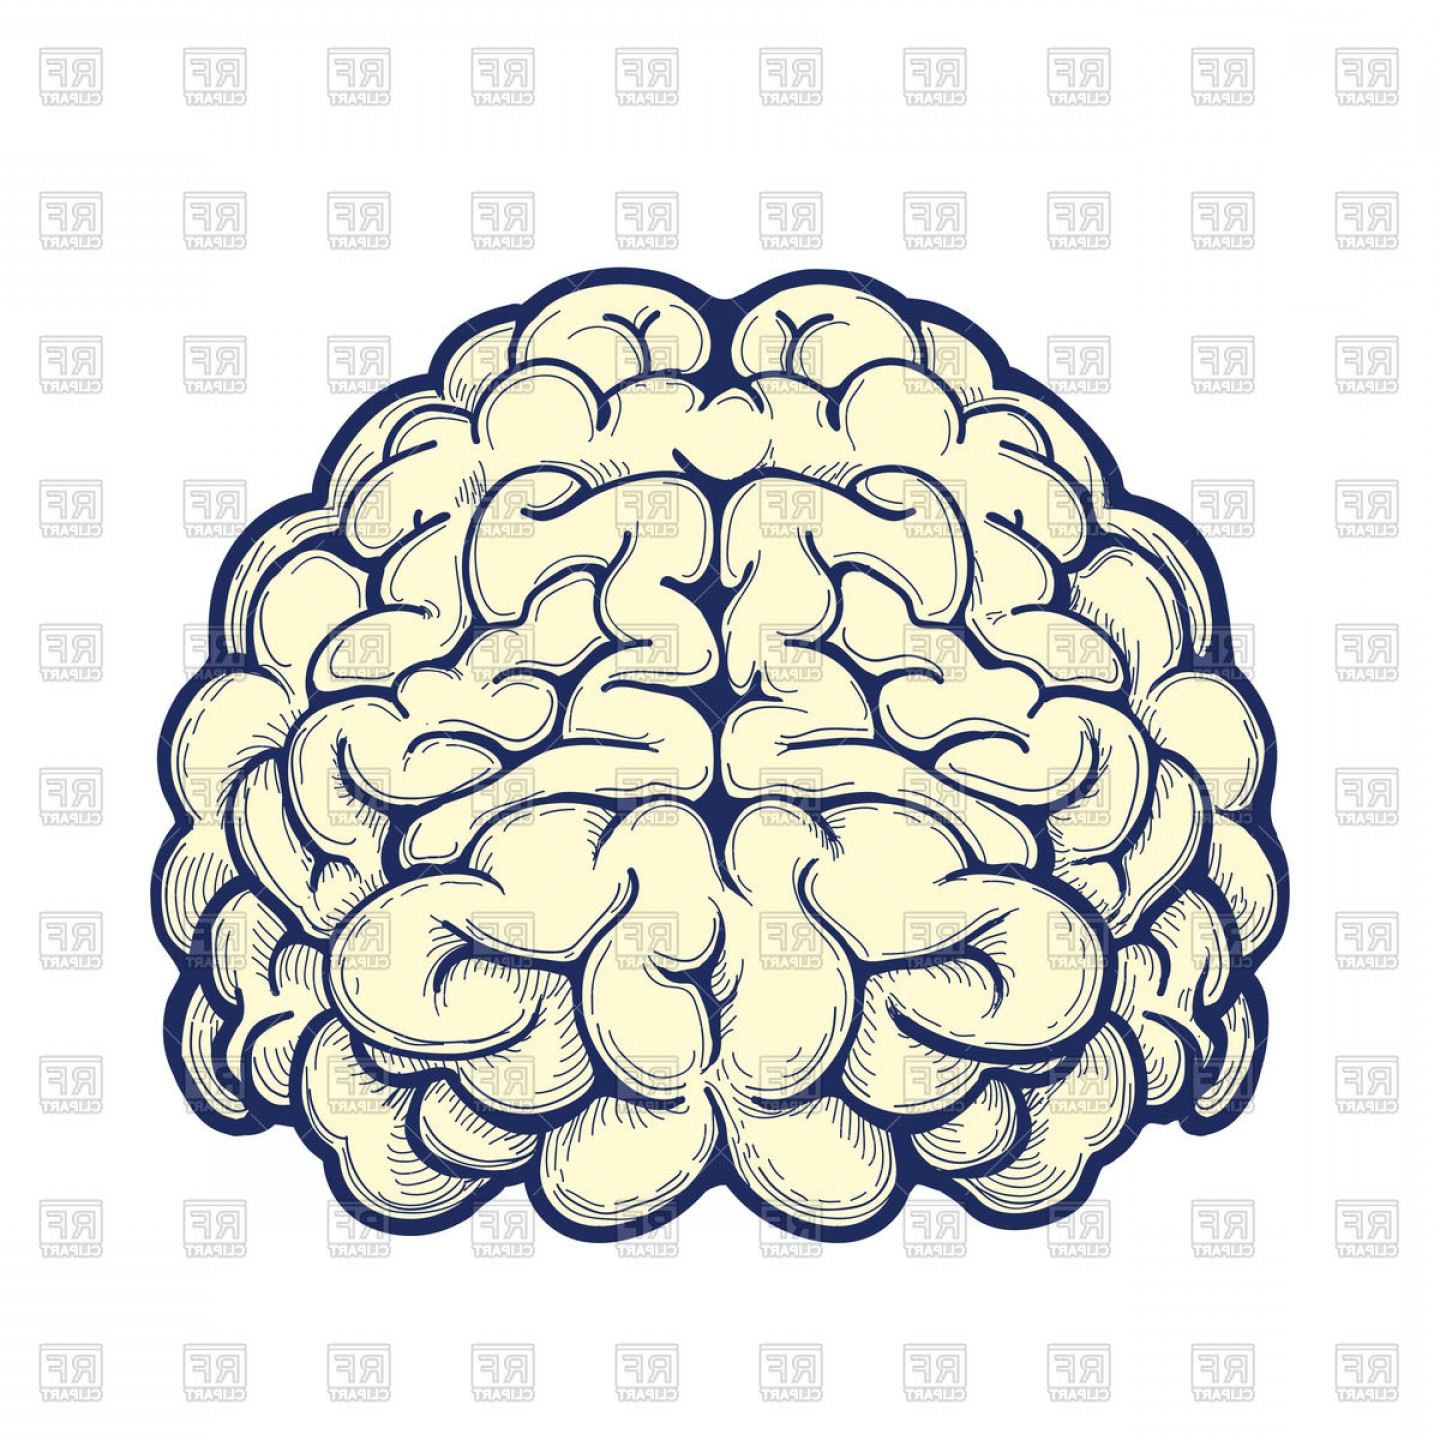 Human brain icon.